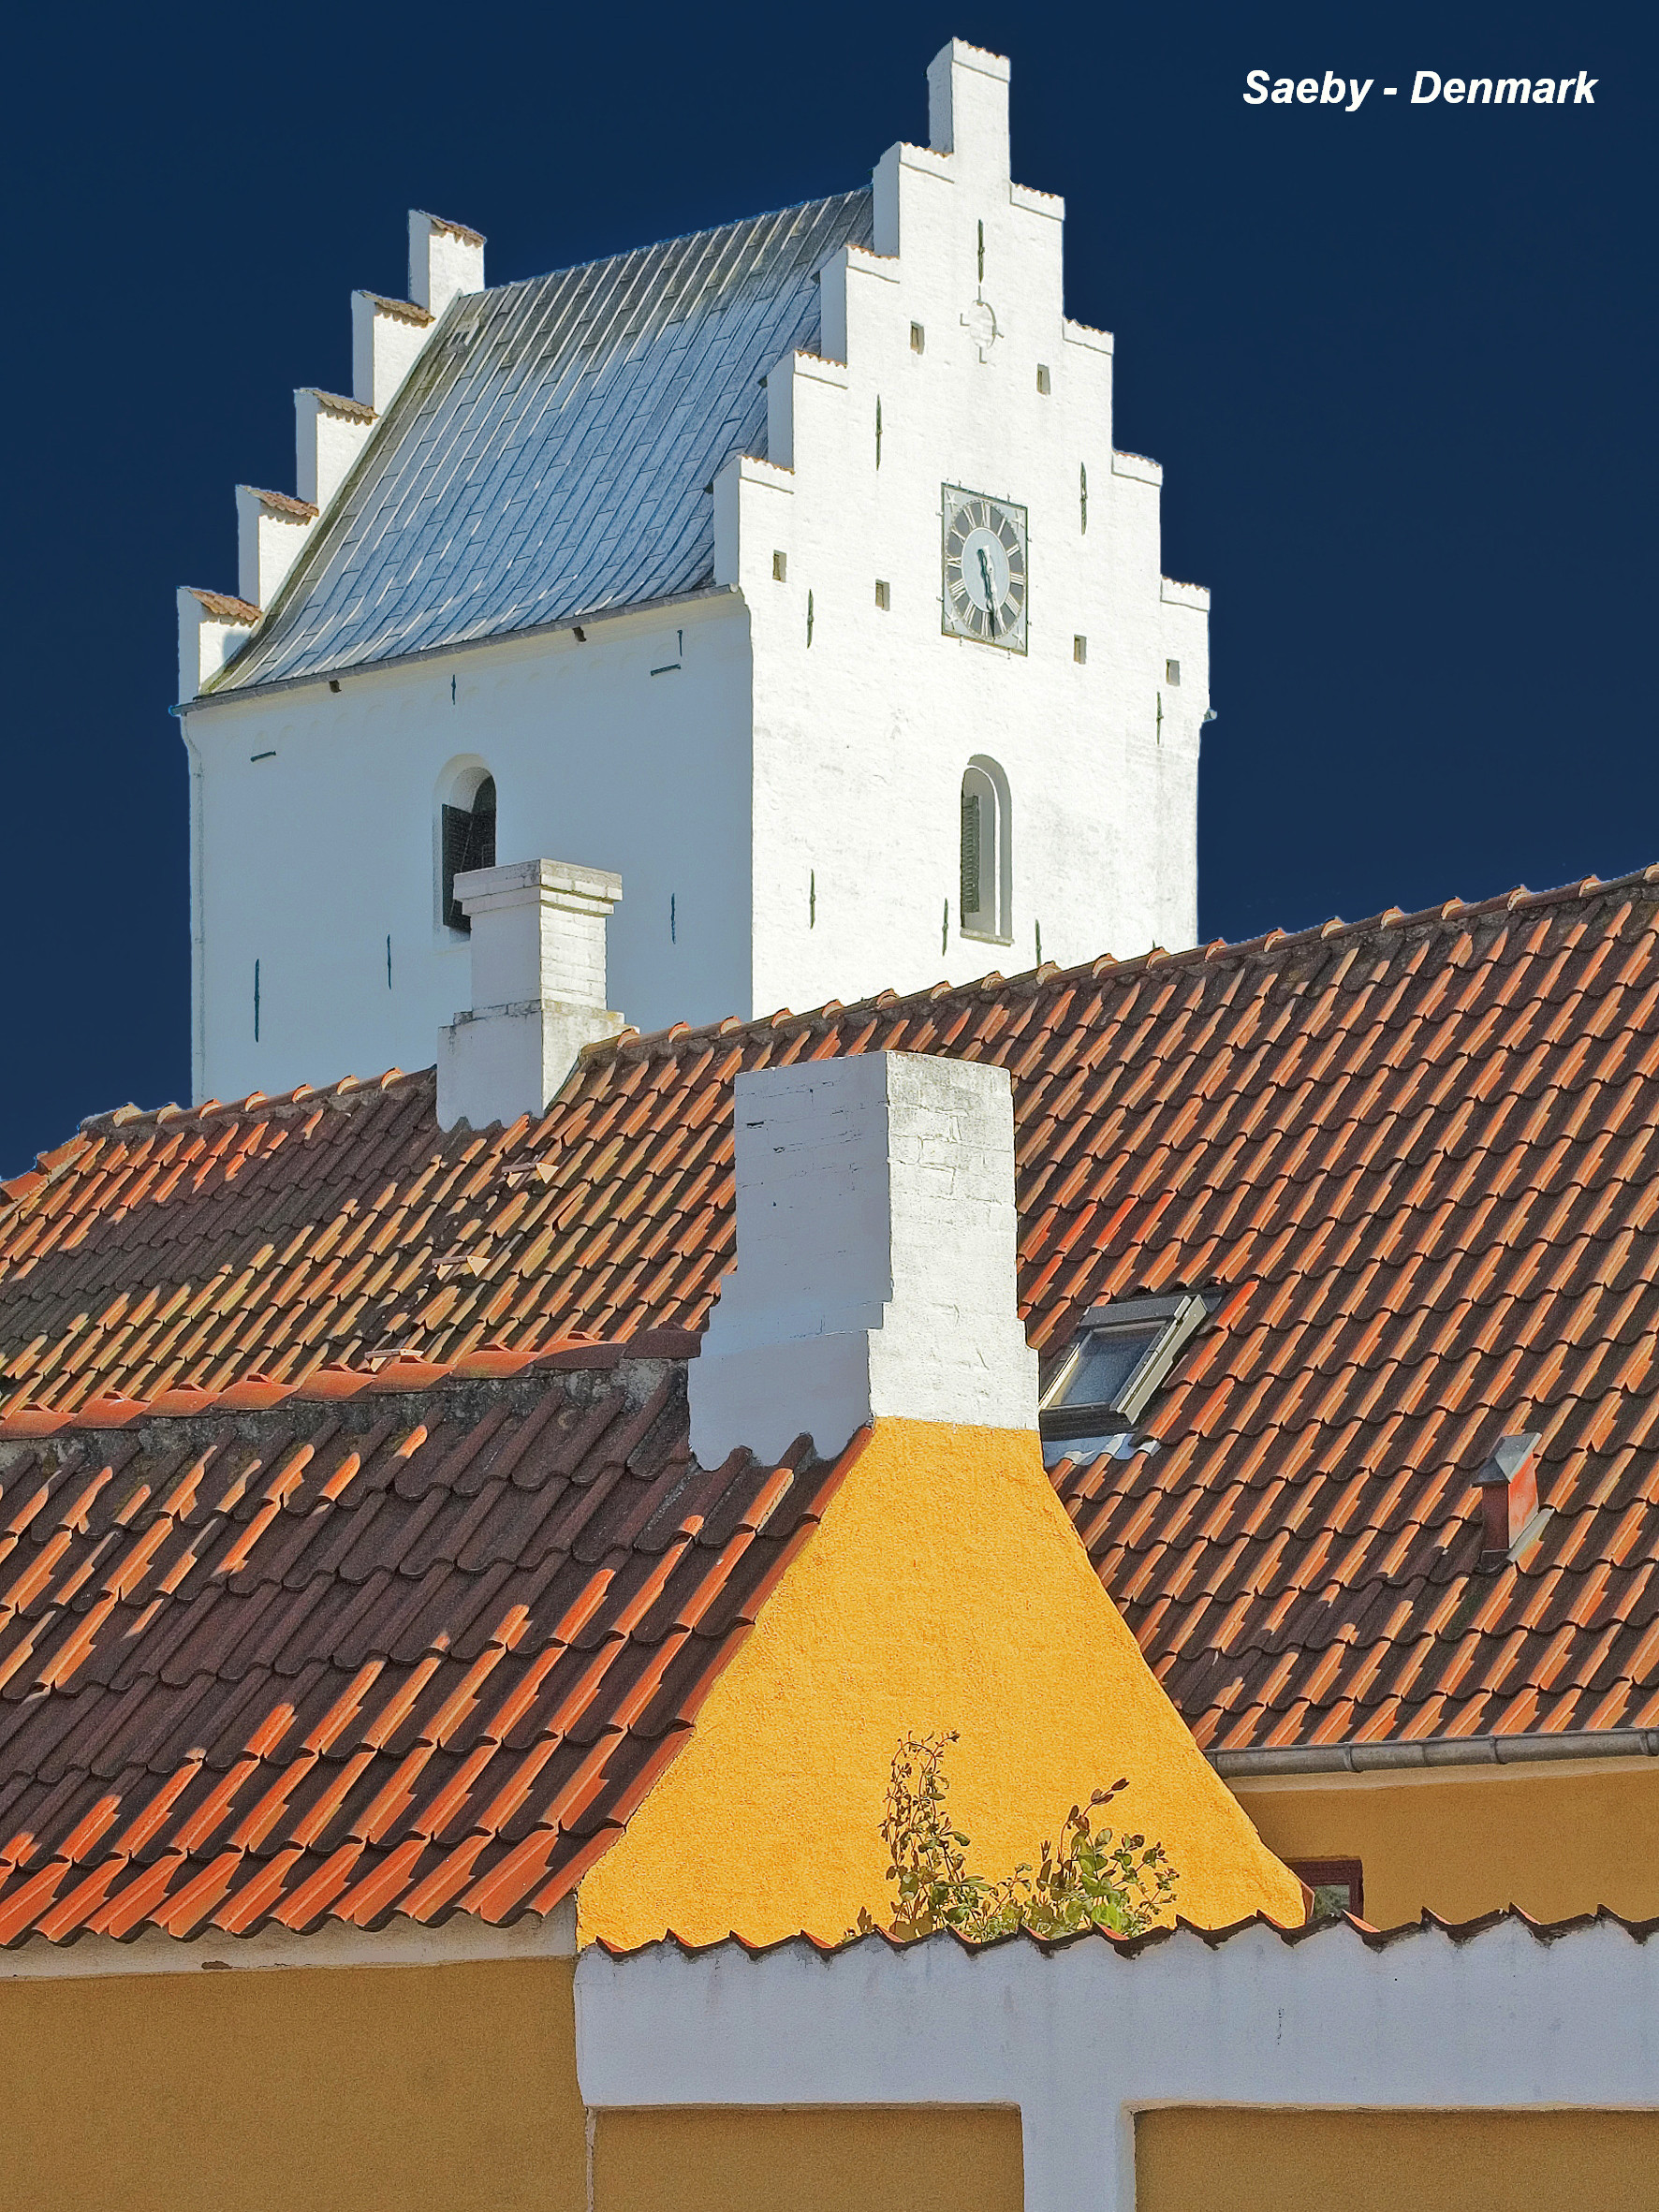 Churchtower in Saeby - Denmark...